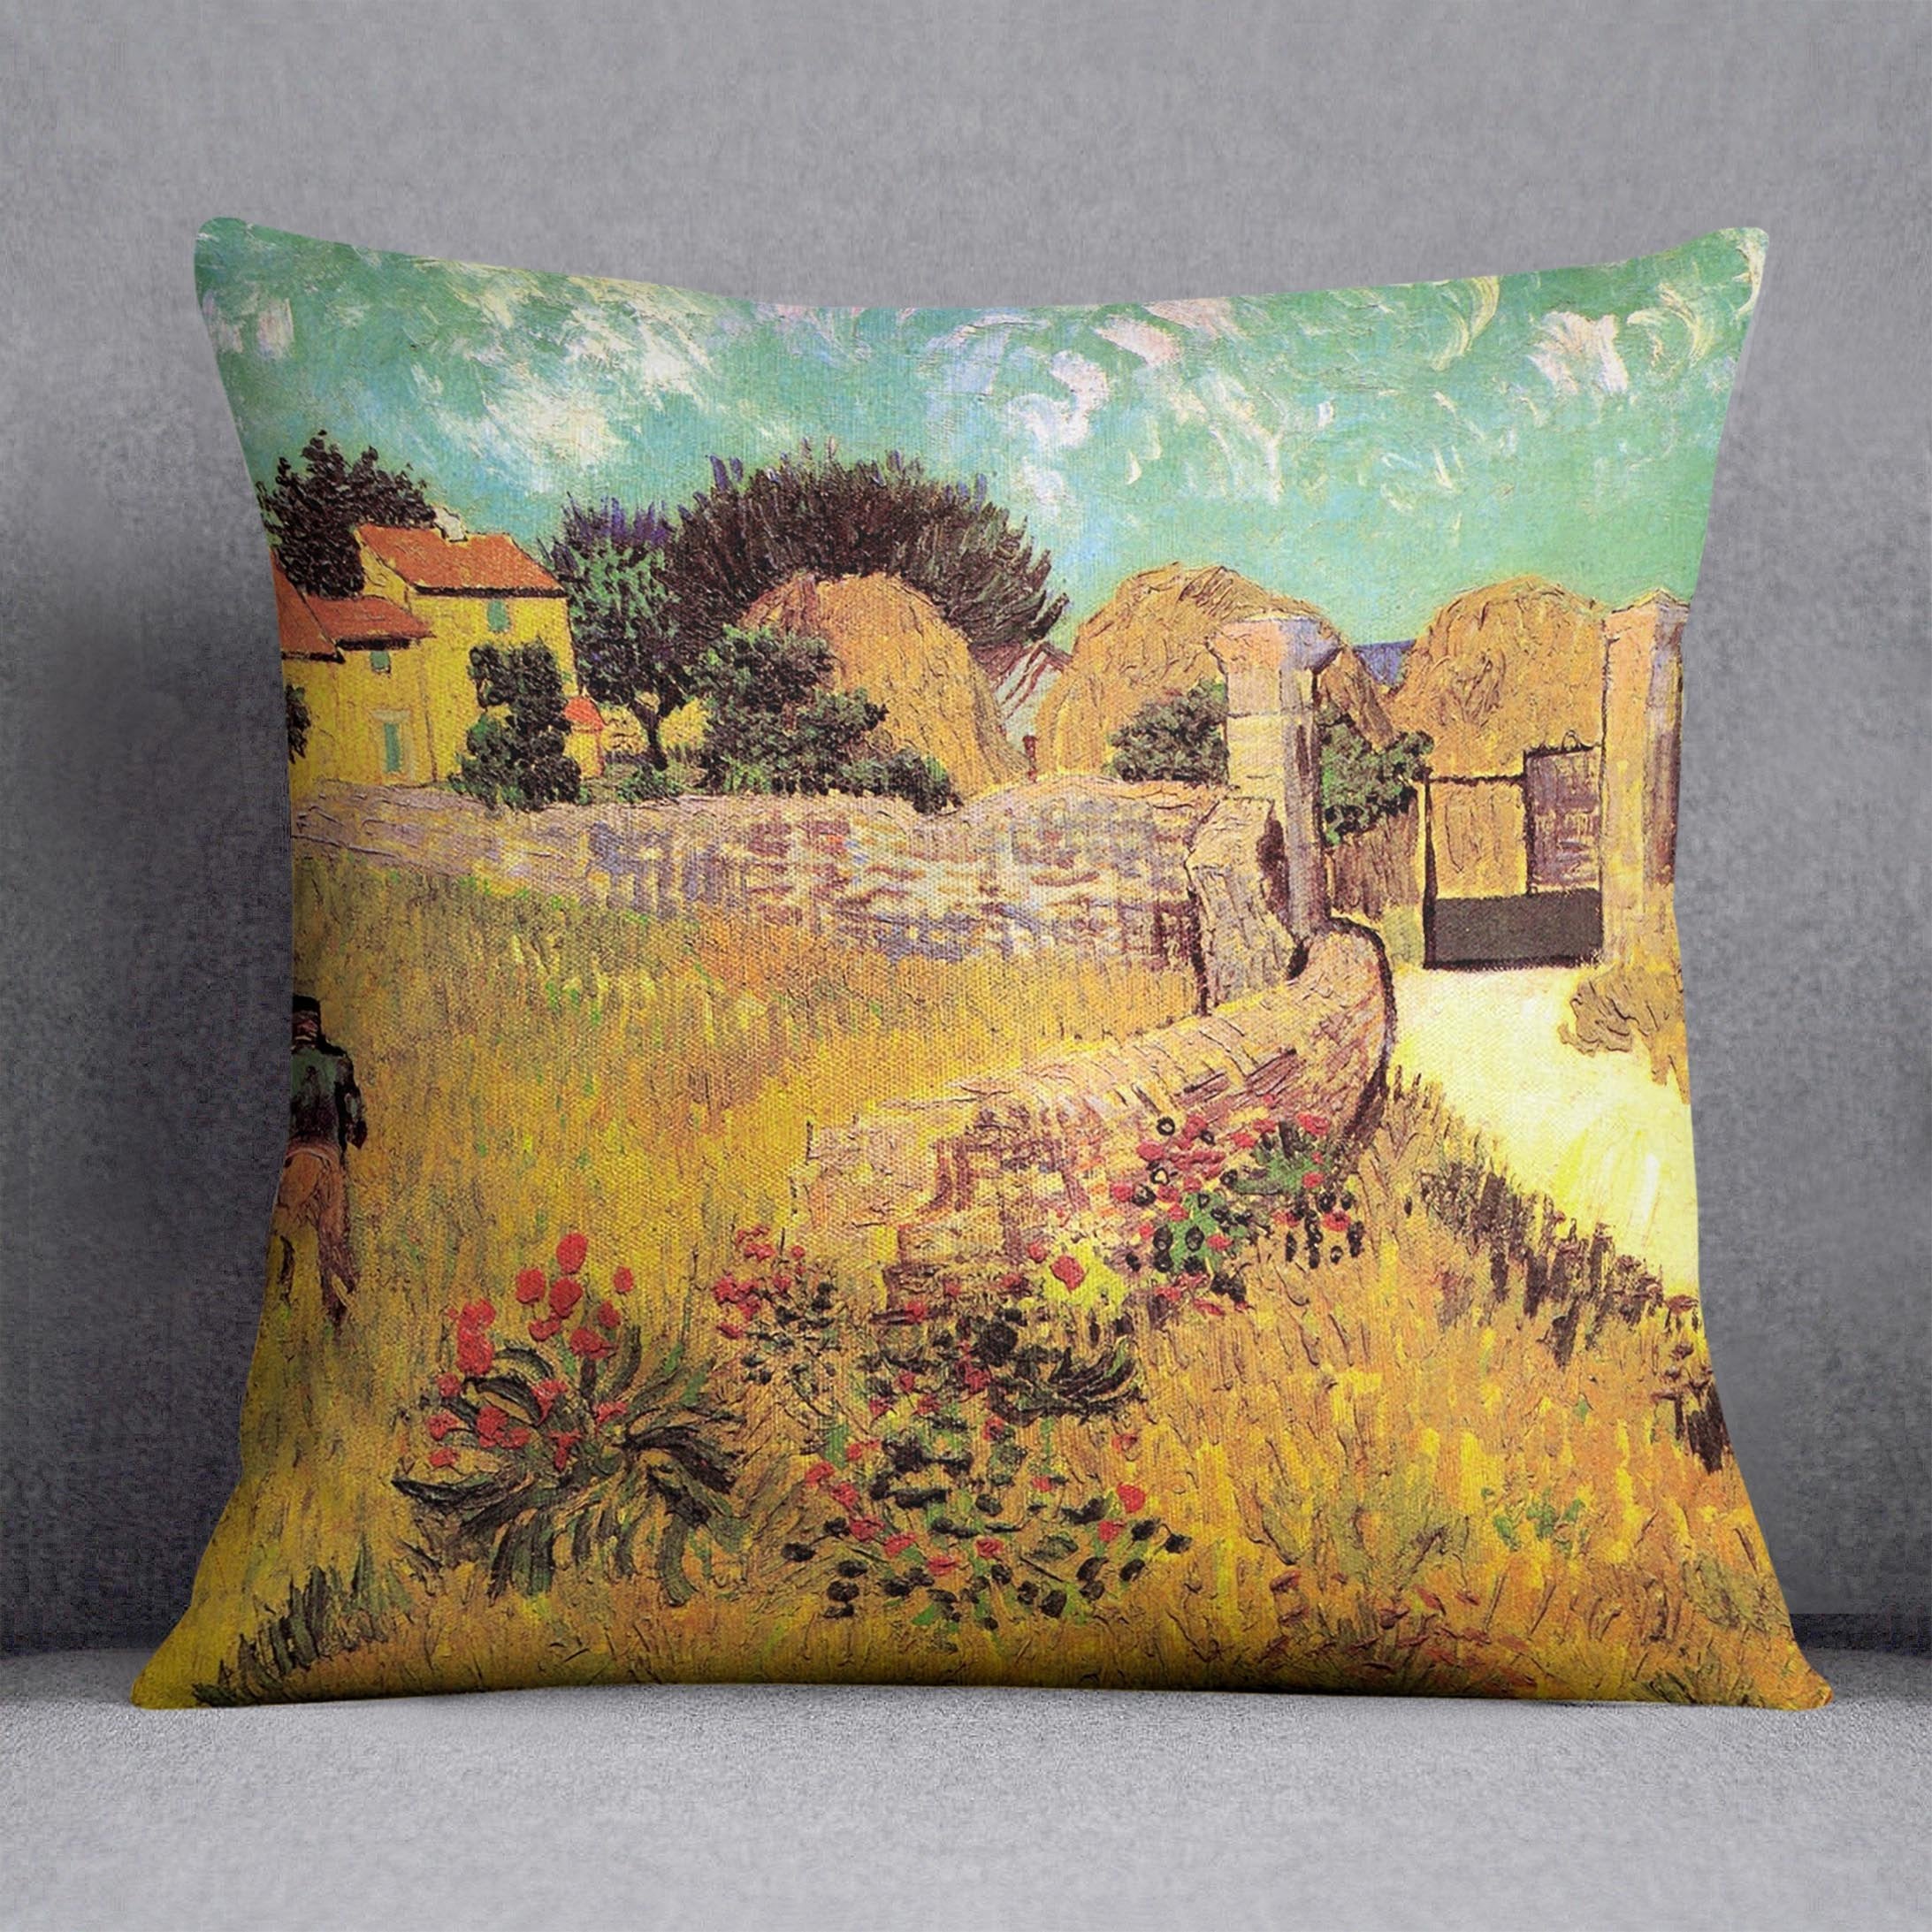 Farmhouse in Provence by Van Gogh Throw Pillow